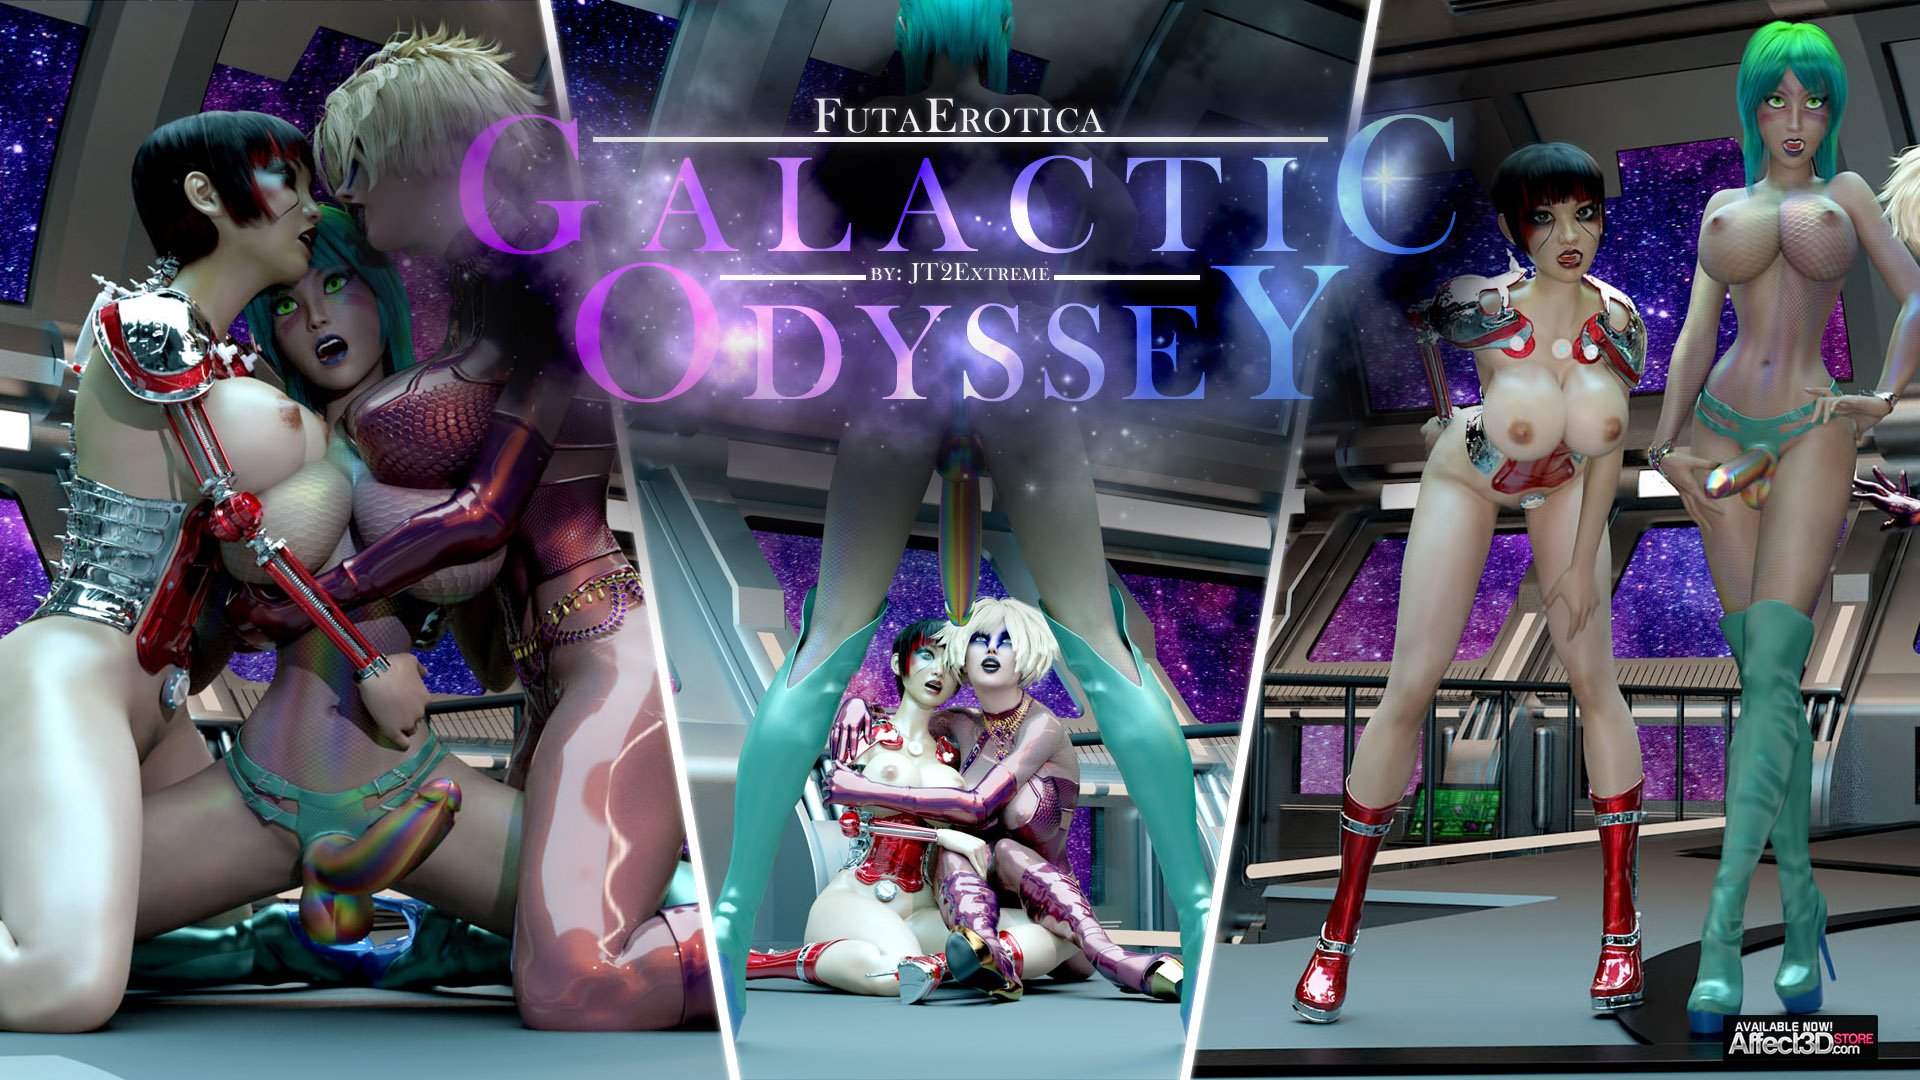 Futaerotica – Galactic Odyssey is JT2XTREME’s New Sci-fi Futa Animation – Watch the Trailer!